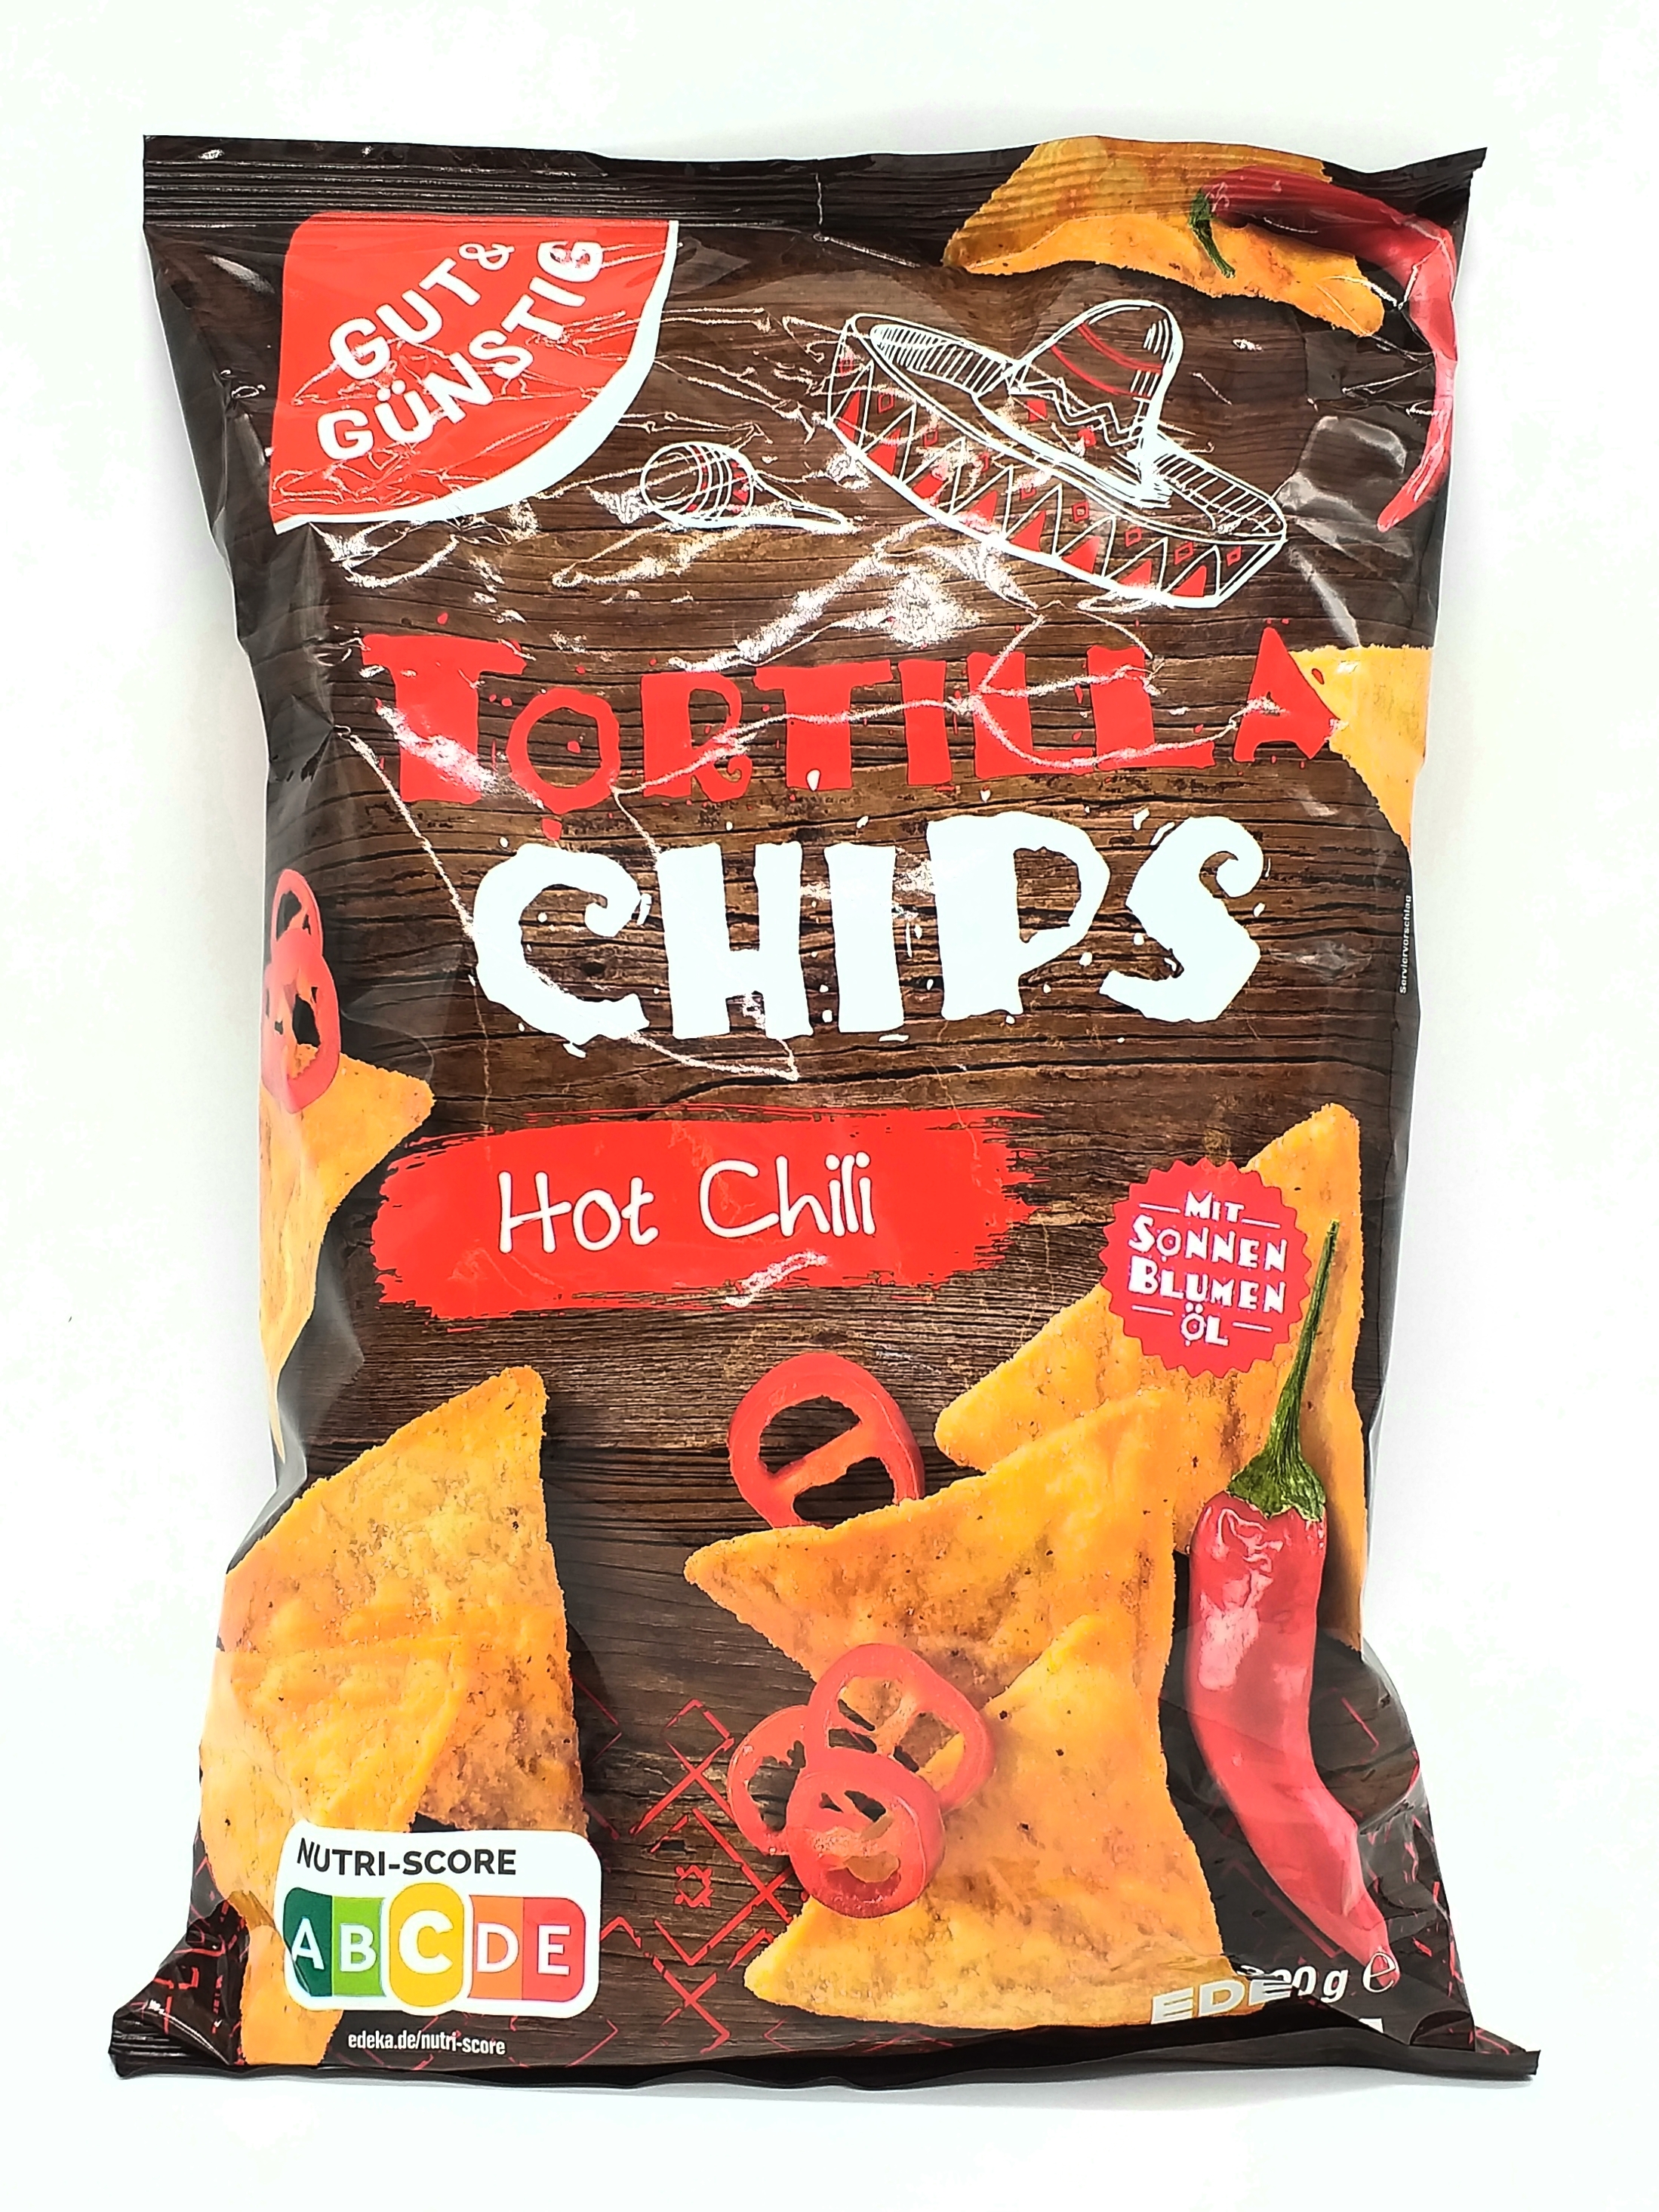 G&G Tortilla Chips Hot Chili 300g